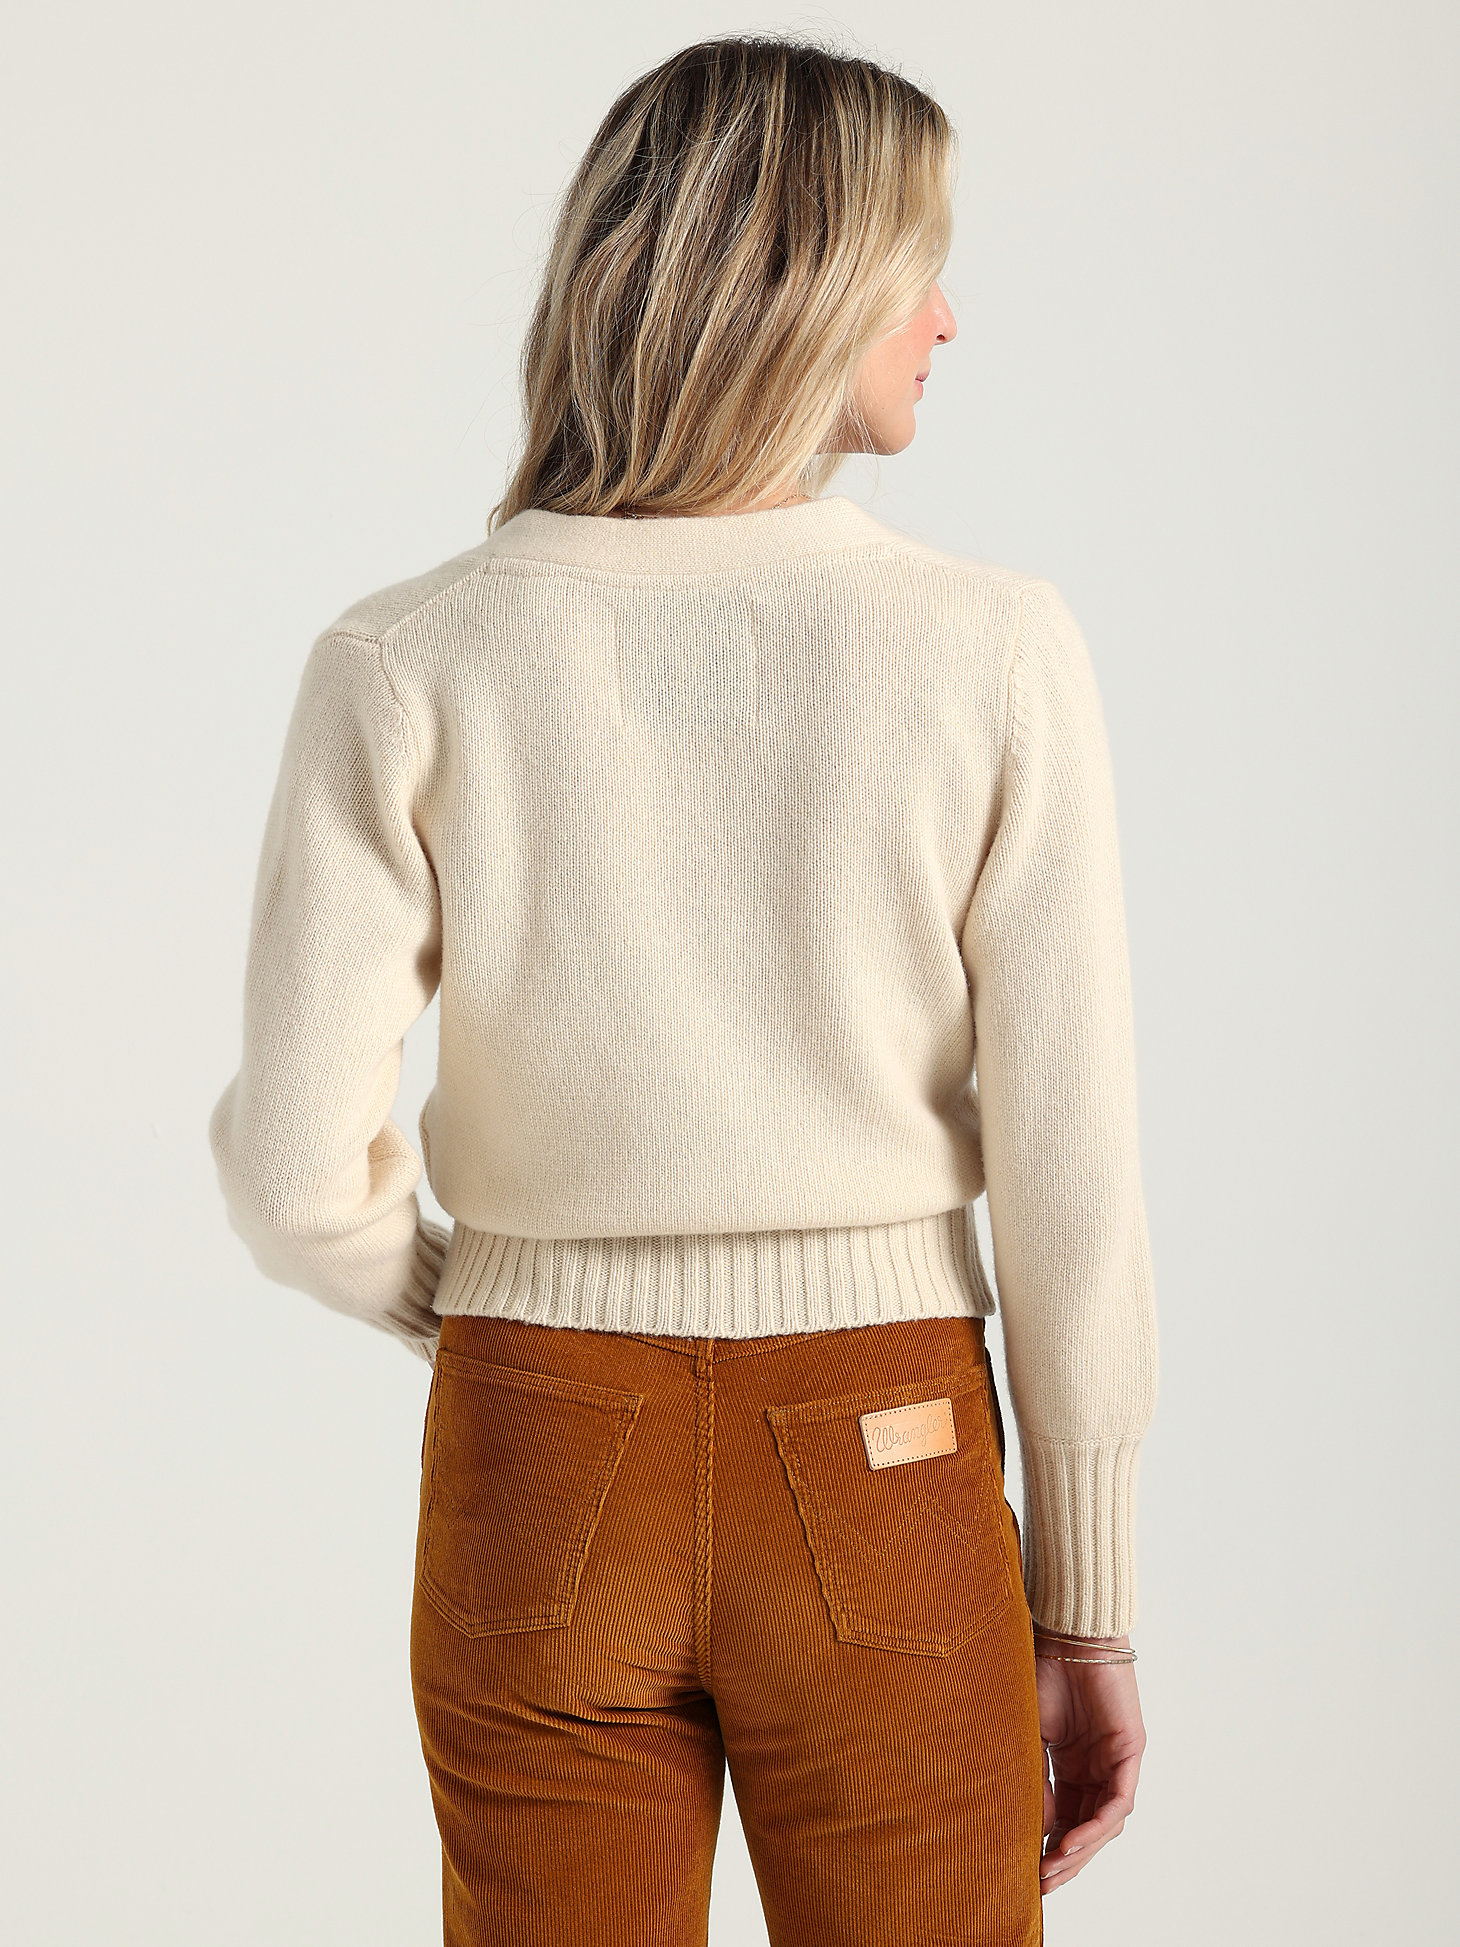 GANT x Wrangler Women's Cashmere Blend Sweater in Vintage Cream alternative view 1